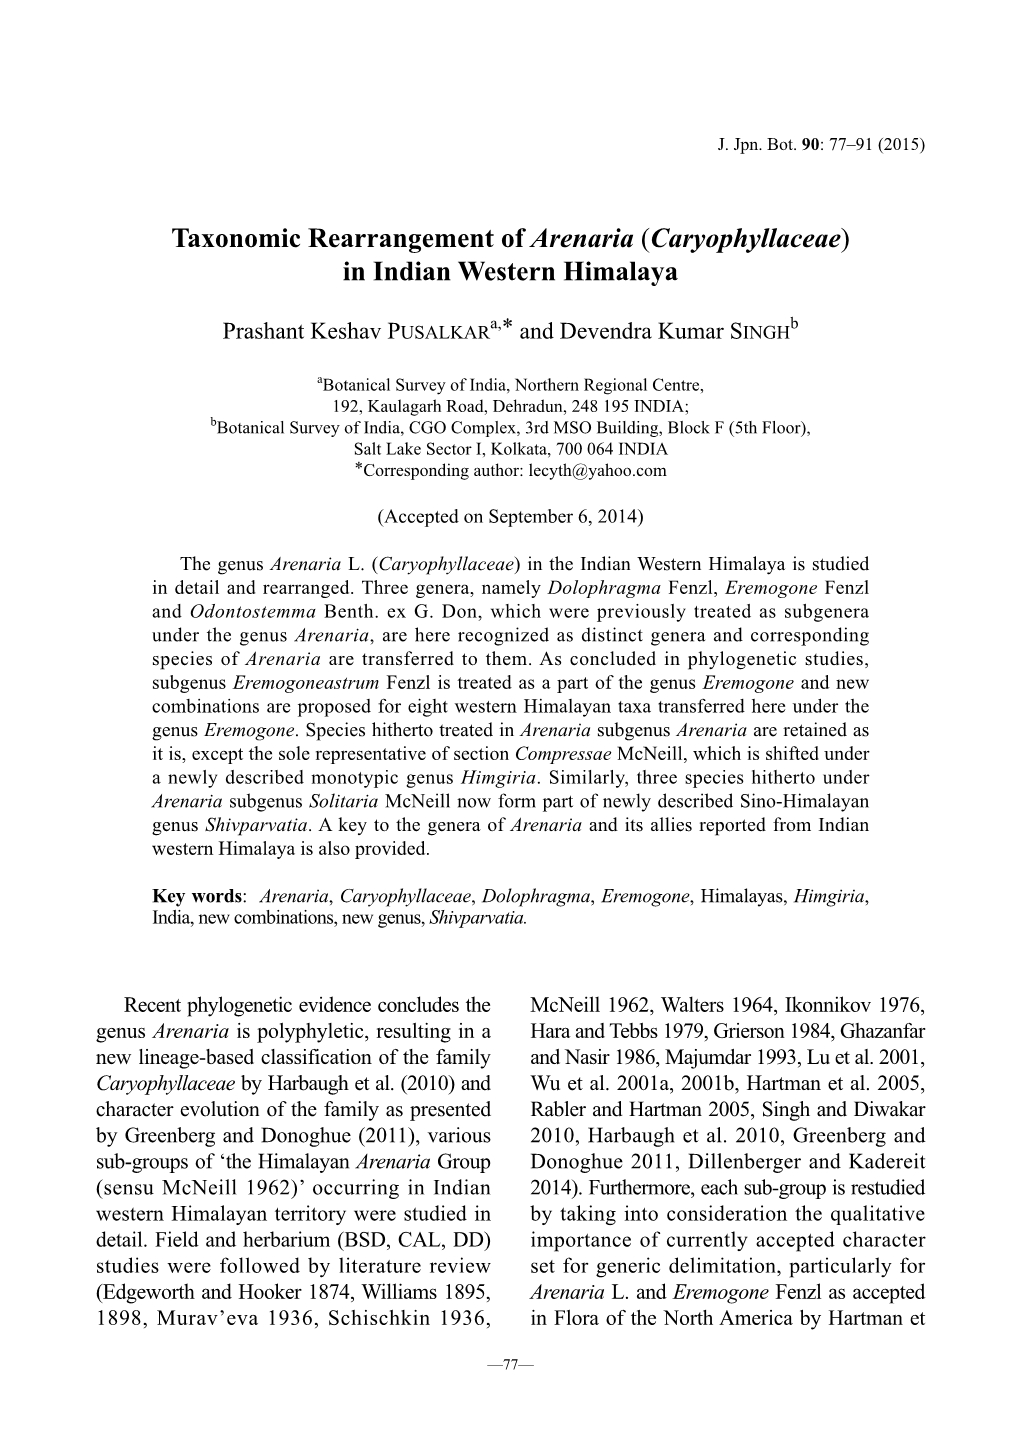 Taxonomic Rearrangement of Arenaria (Caryophyllaceae) in Indian Western Himalaya